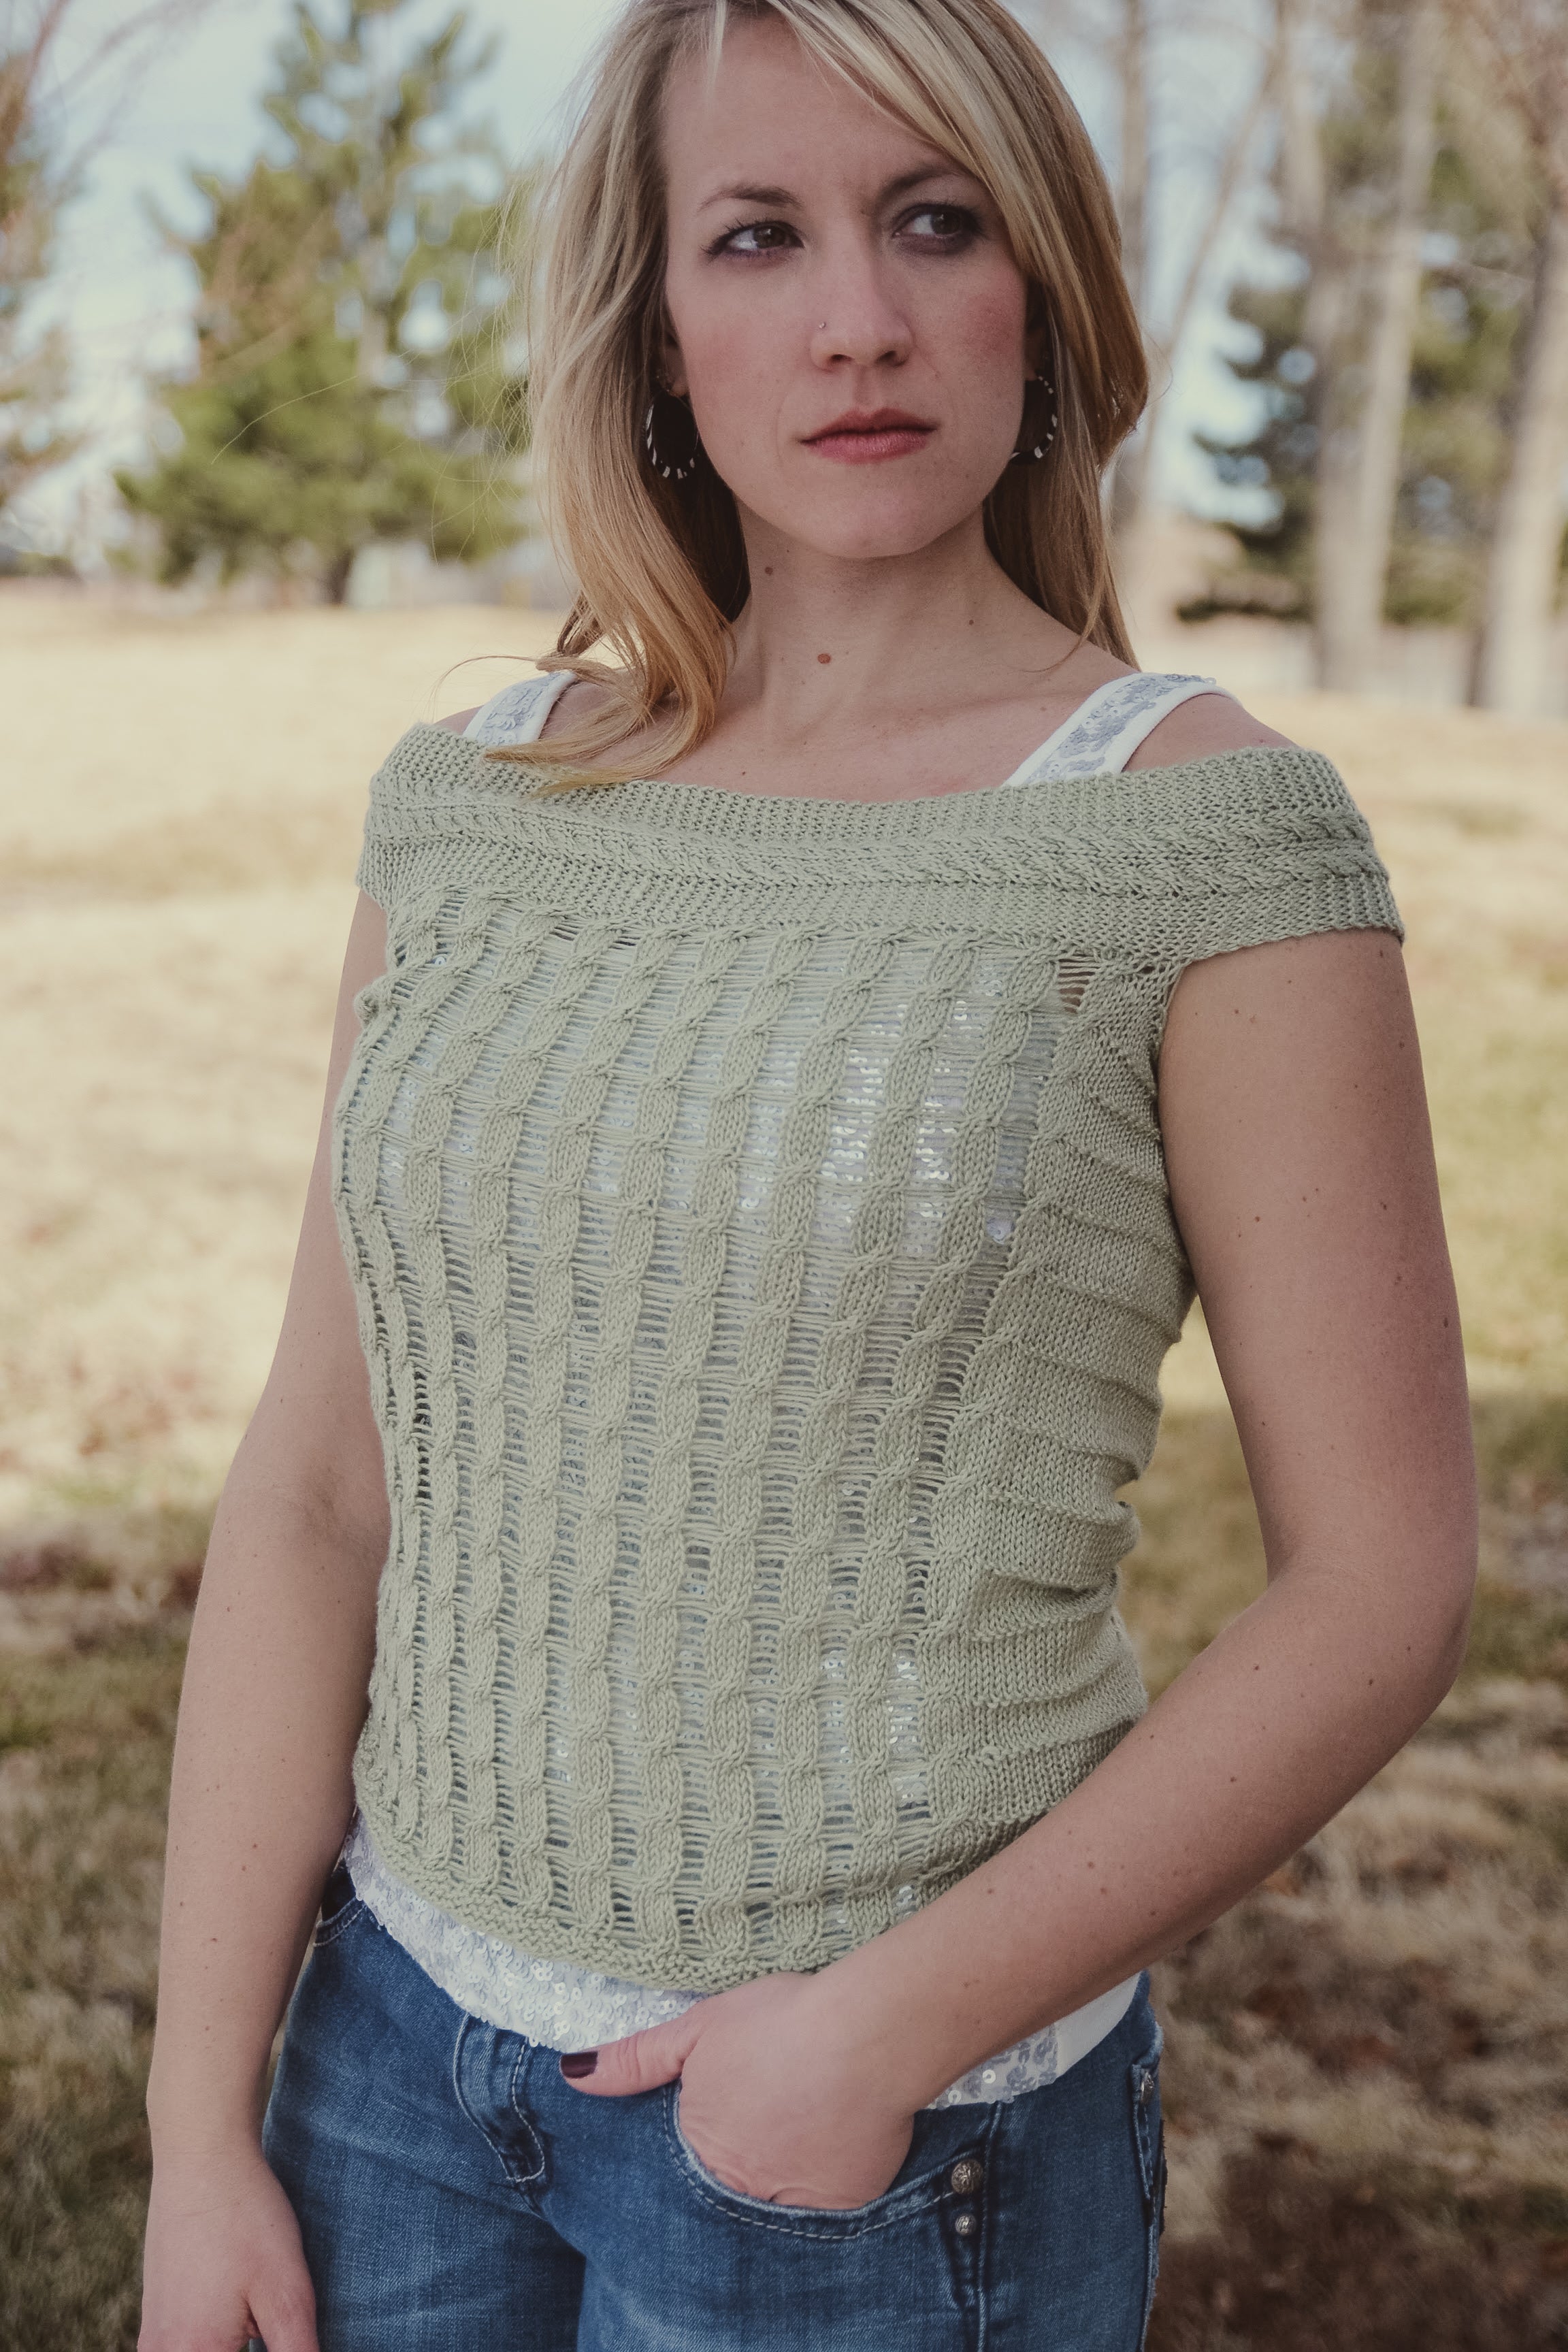 Savannah Shutters Knit Top Pattern